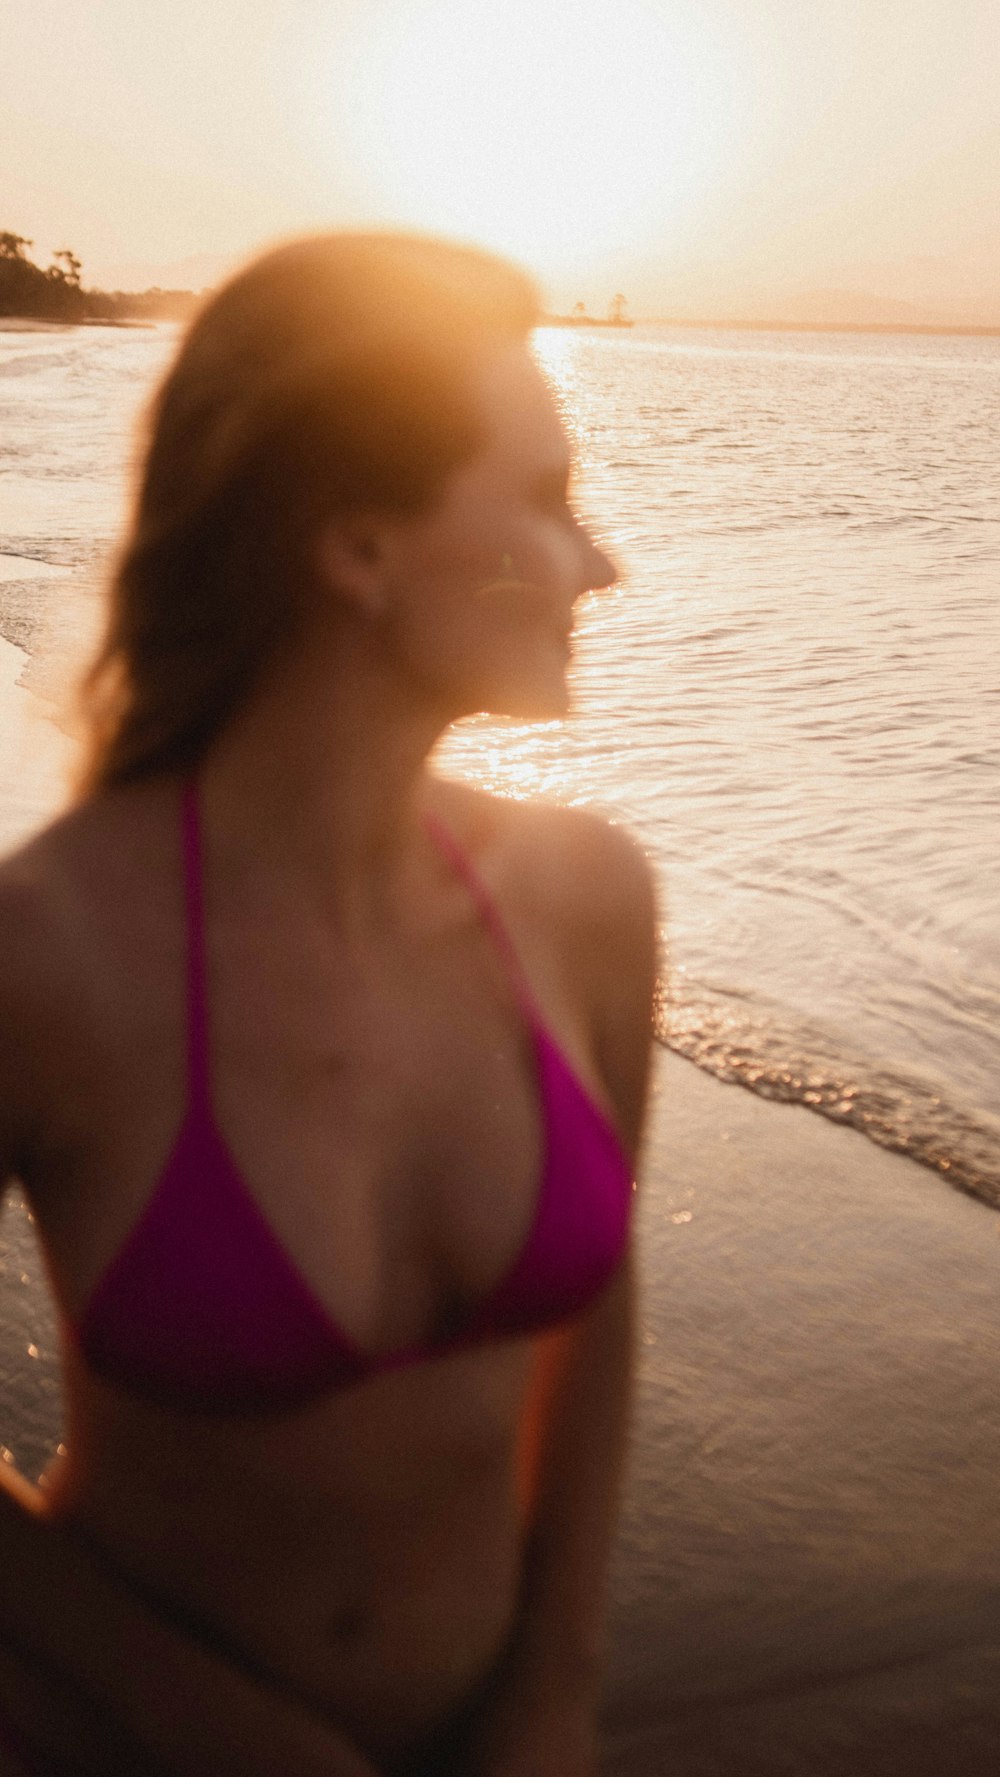 a woman in a pink bikini standing on a beach